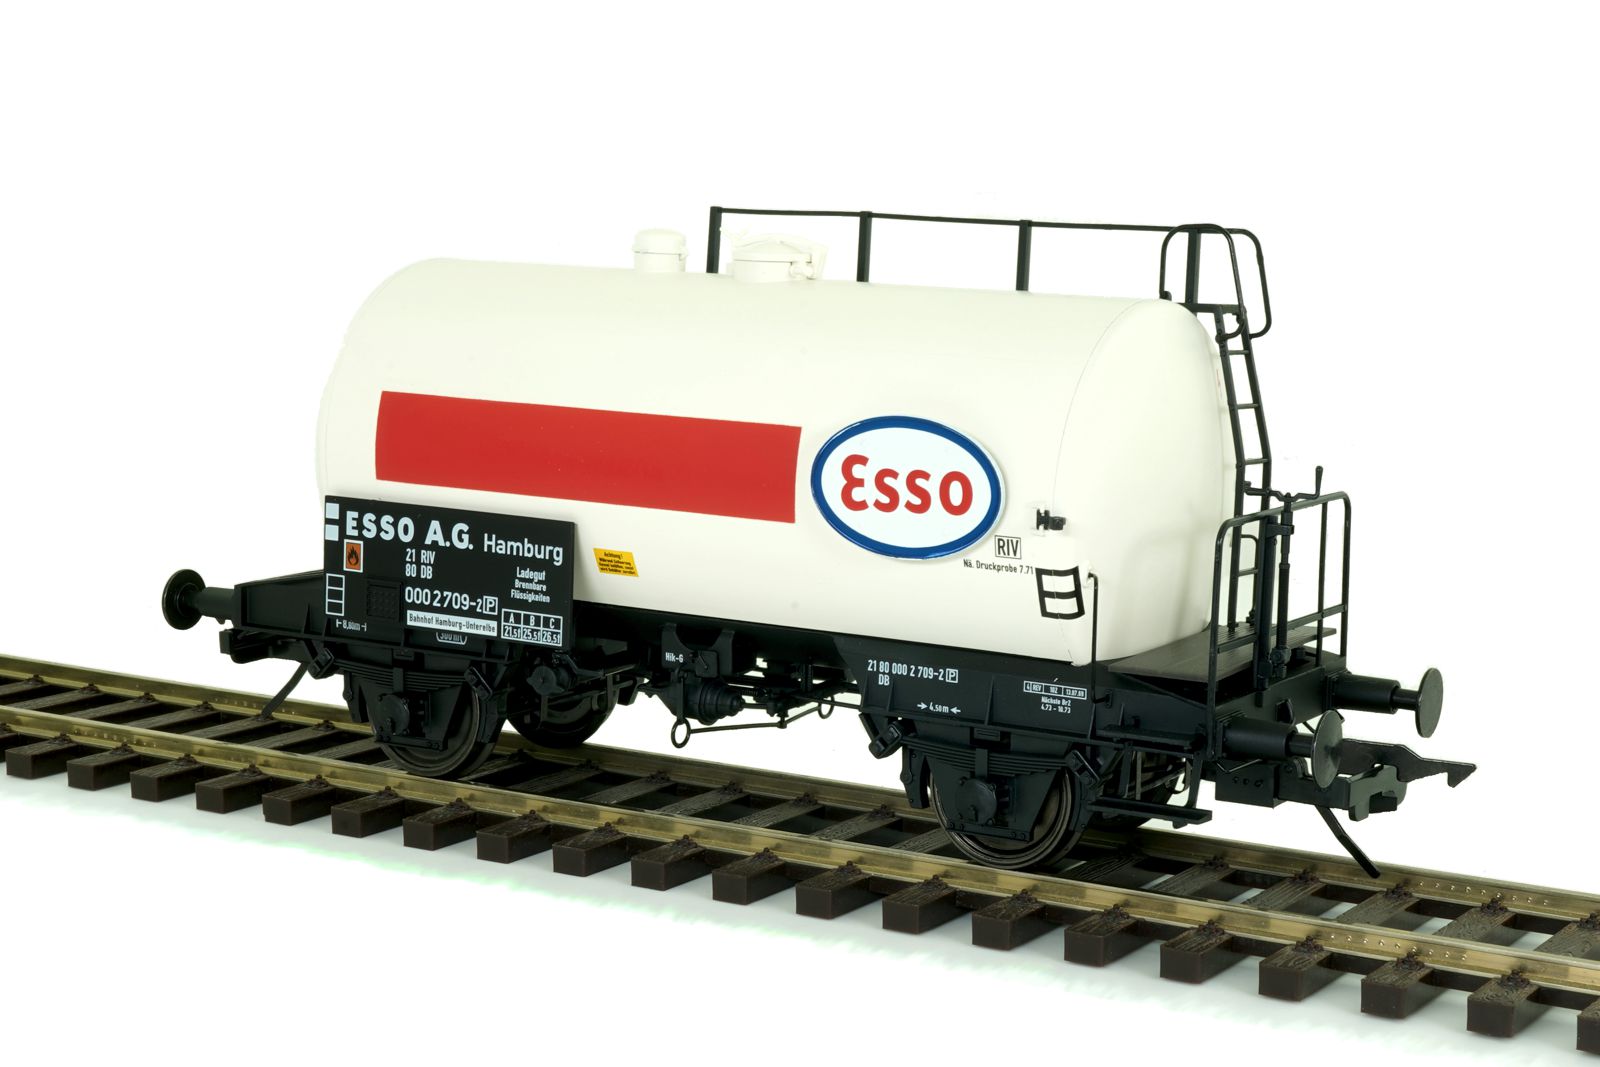 Kesselwagen "Esso" Betr.-Nr. 21 80 000 2 709-2